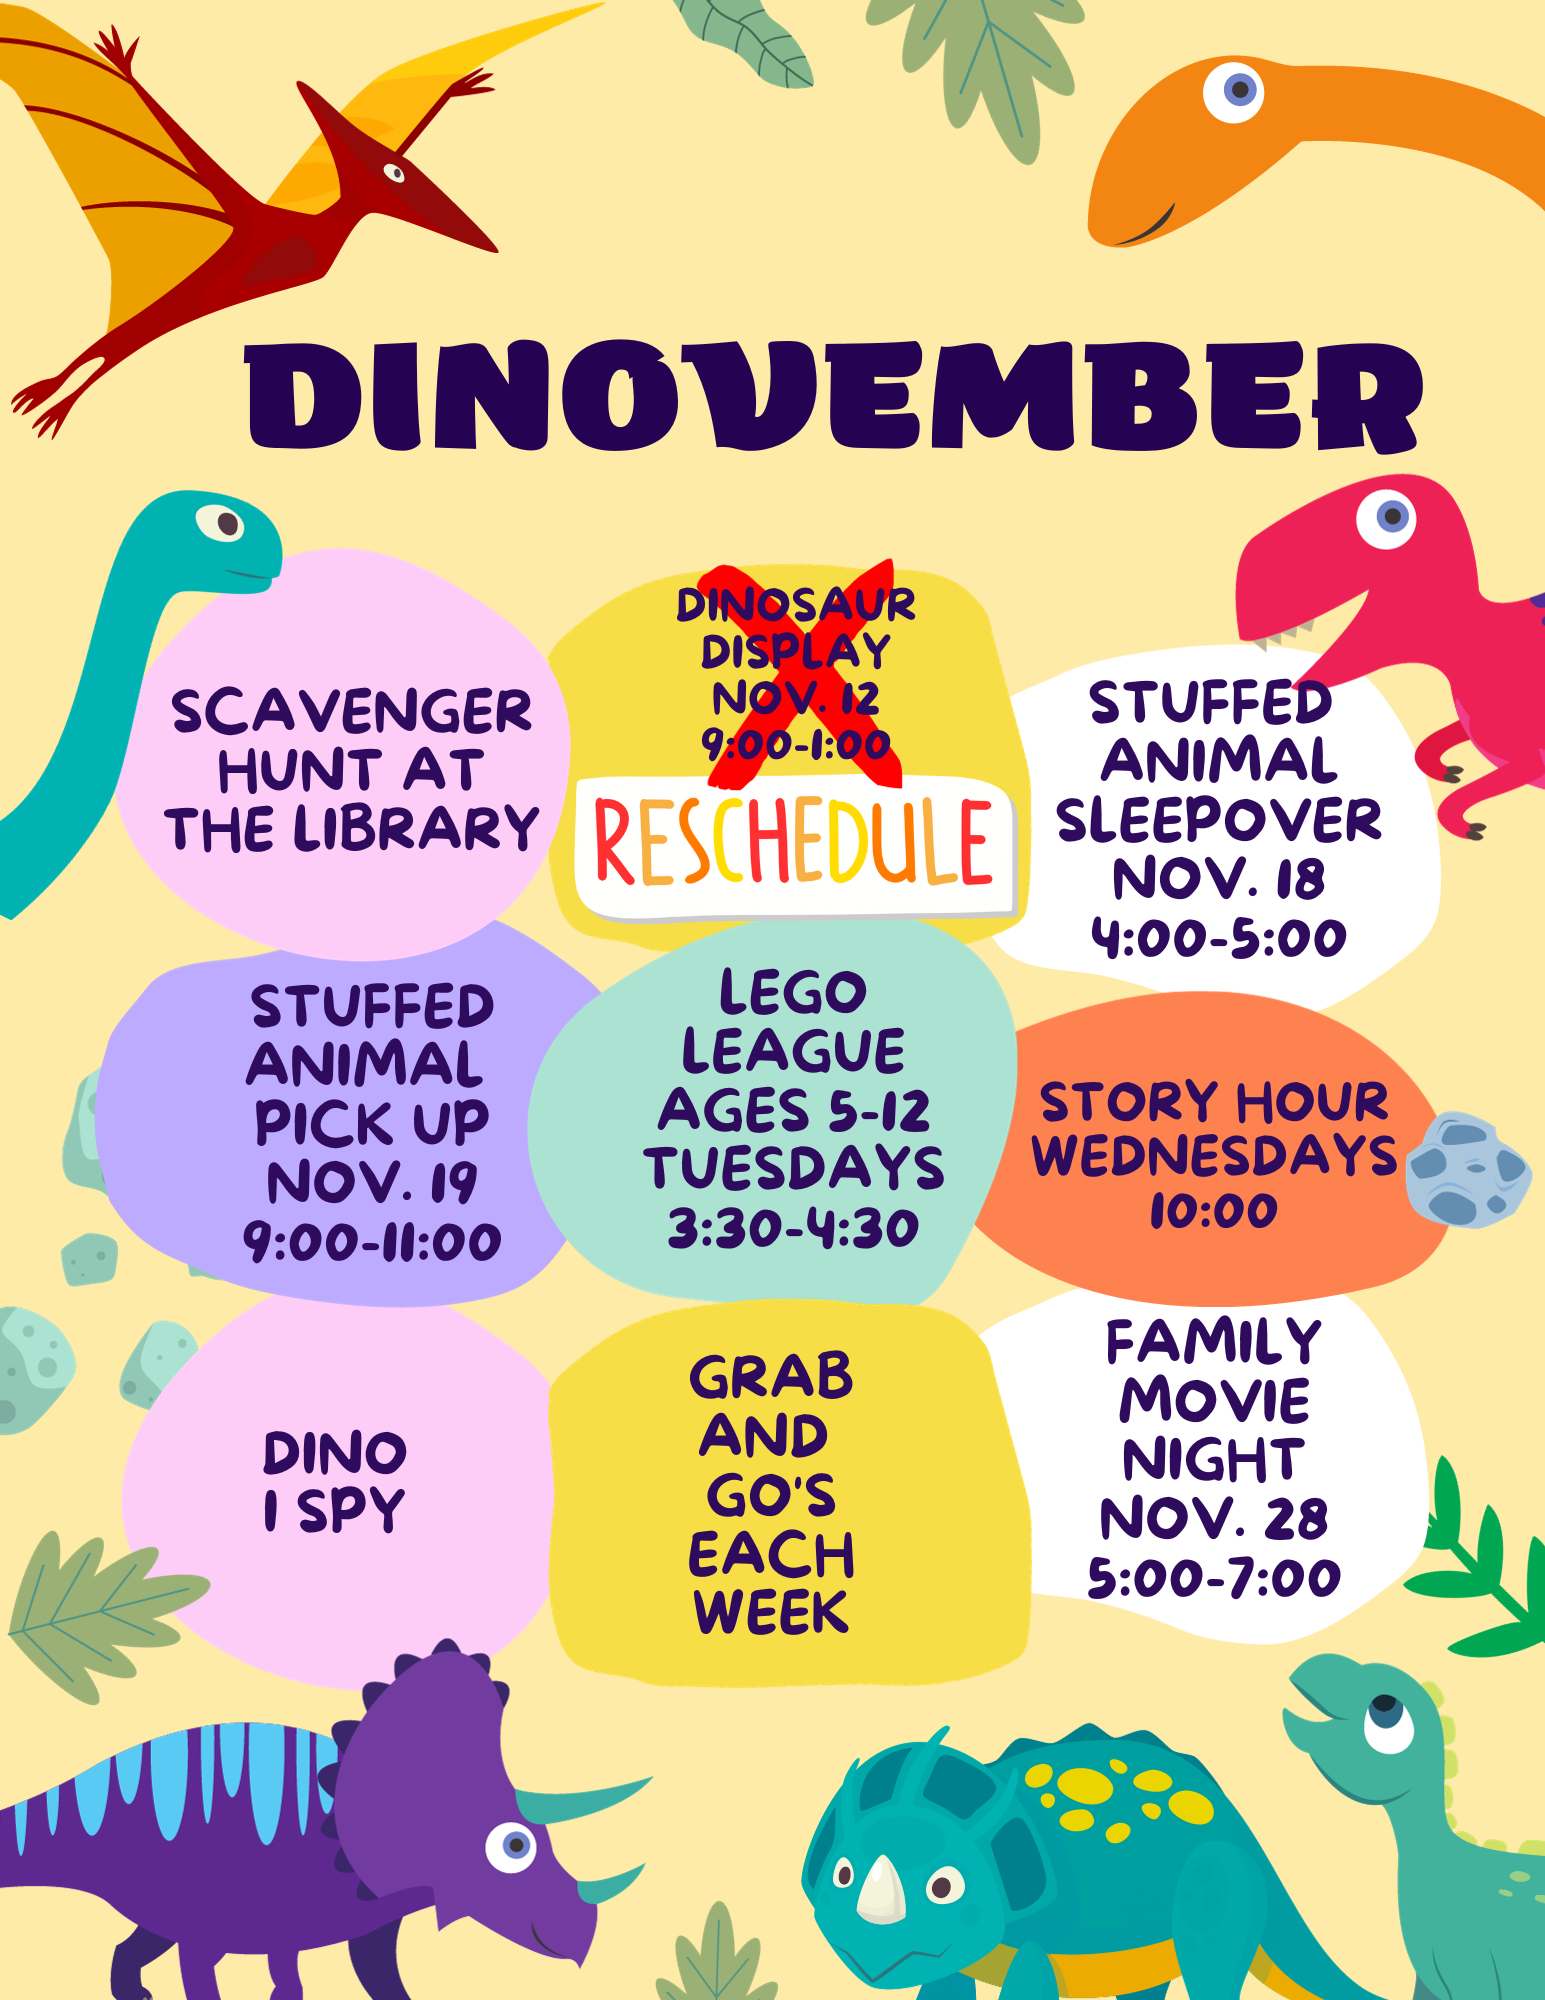 Dinovember events